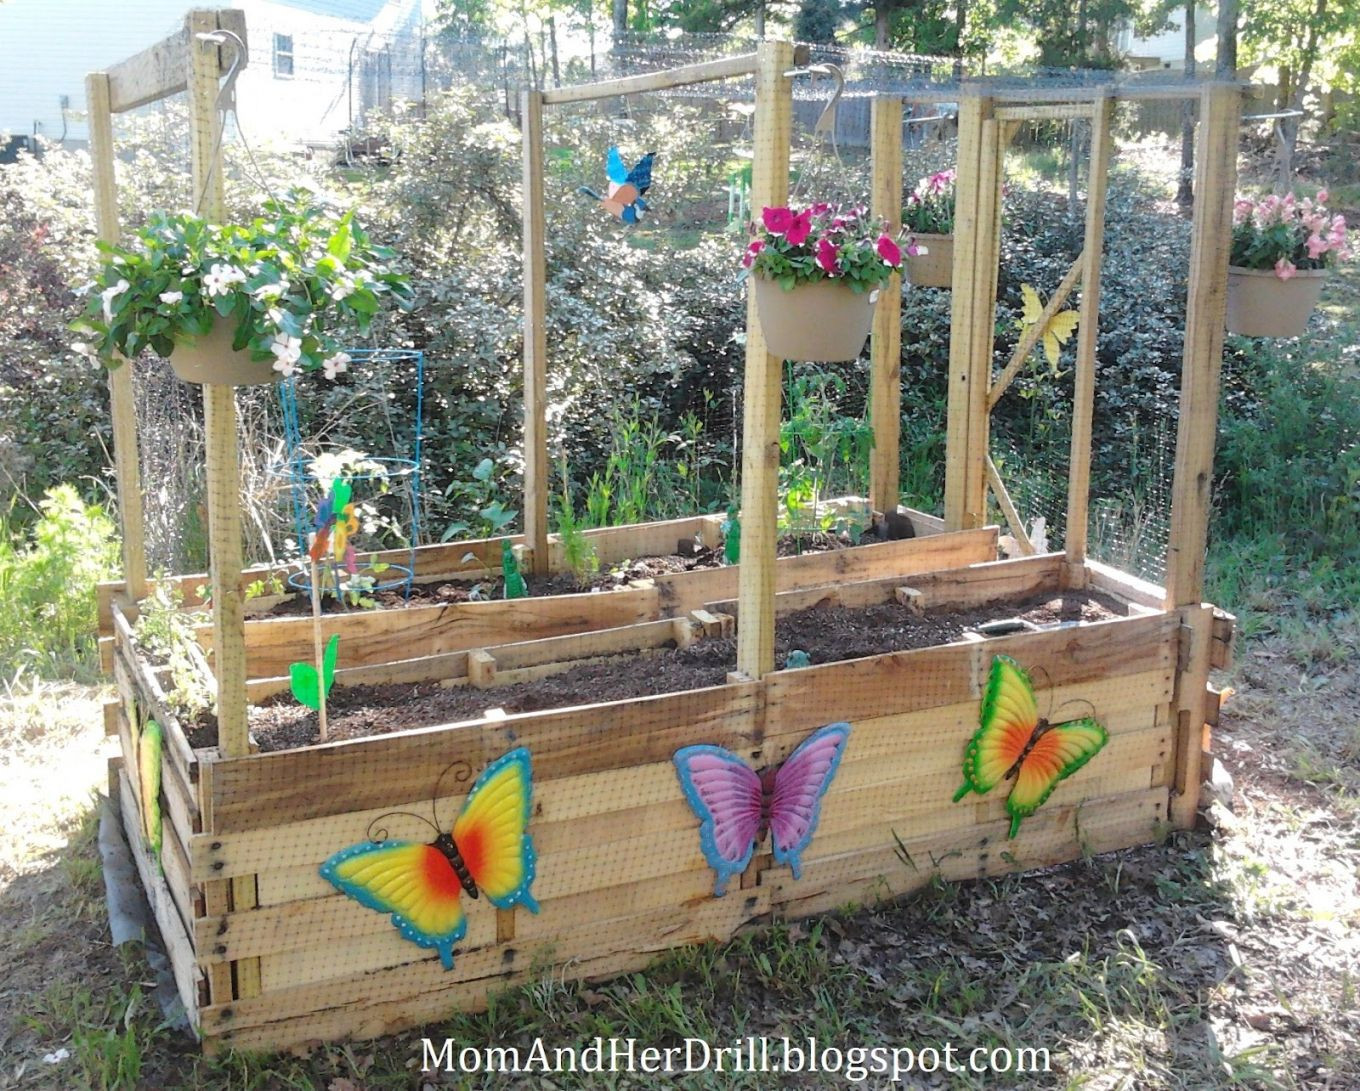 Best ideas about School Garden Ideas
. Save or Pin Image result for school garden design ideas Now.